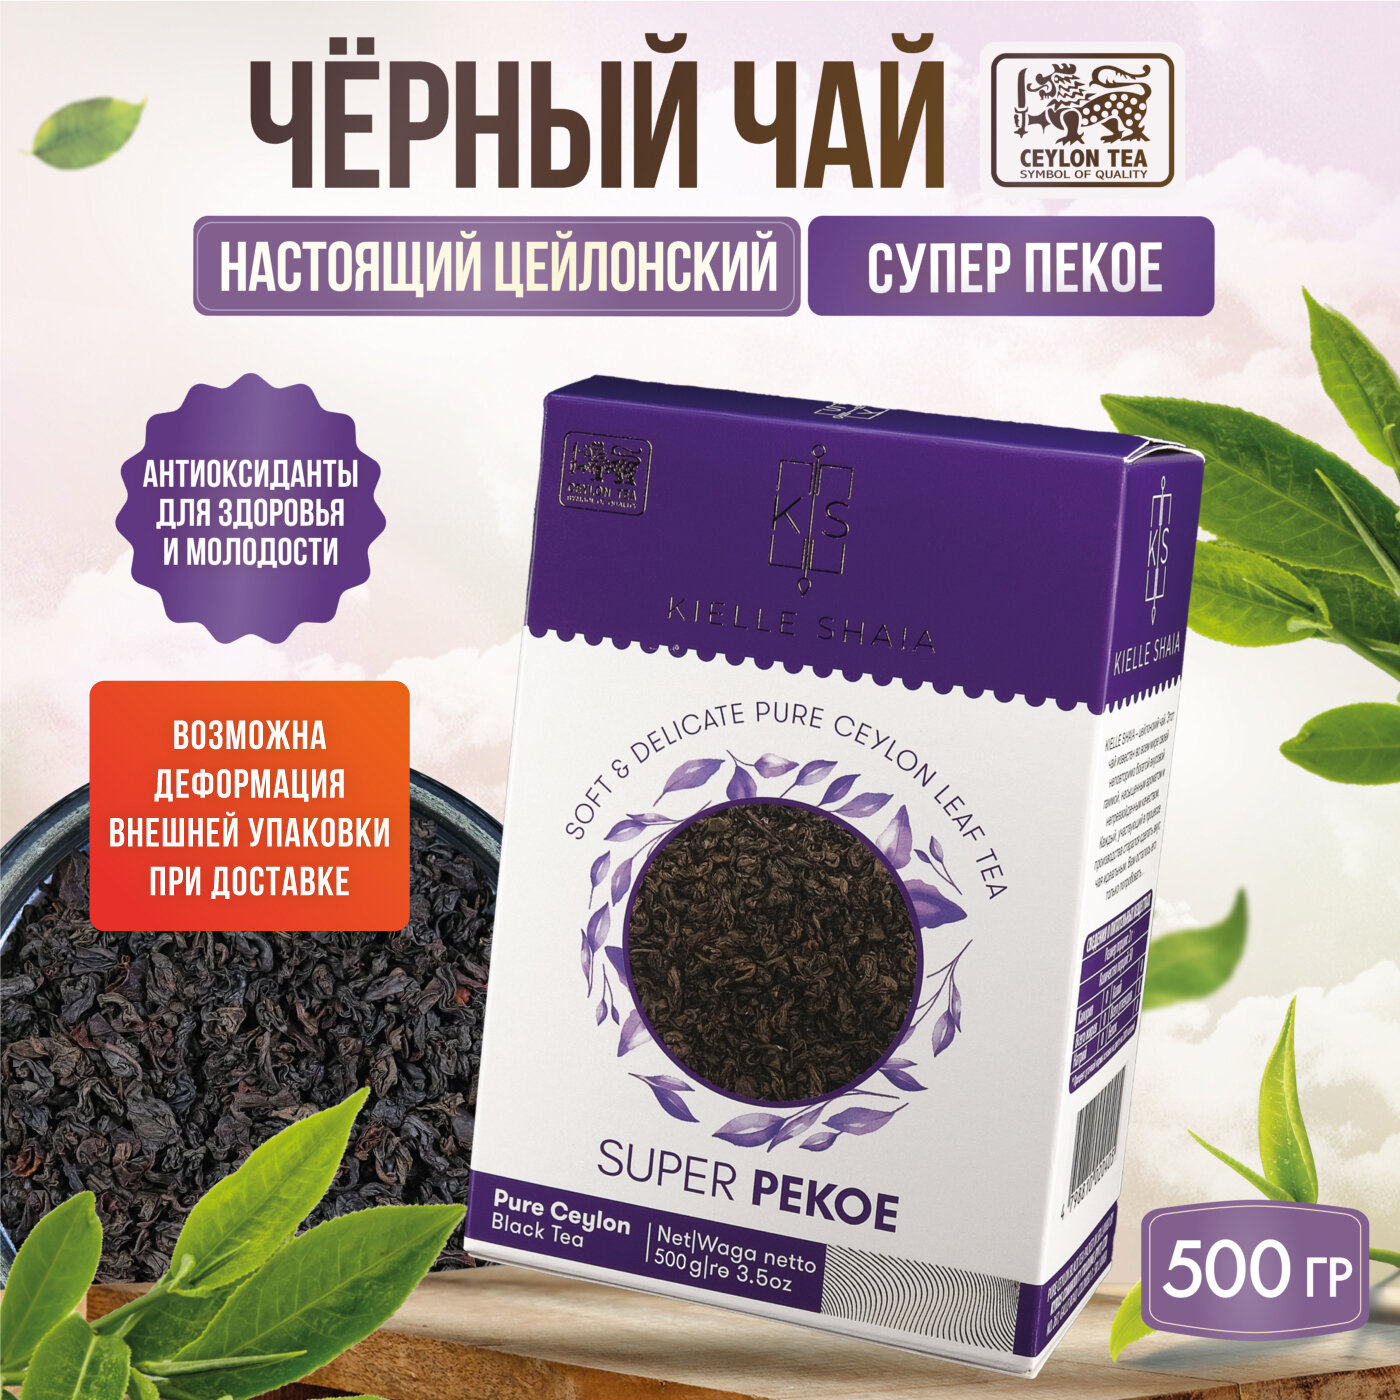 Чай черный листовой цейлонский SUPER PEKOE KIELLE SHAIA, 500 г